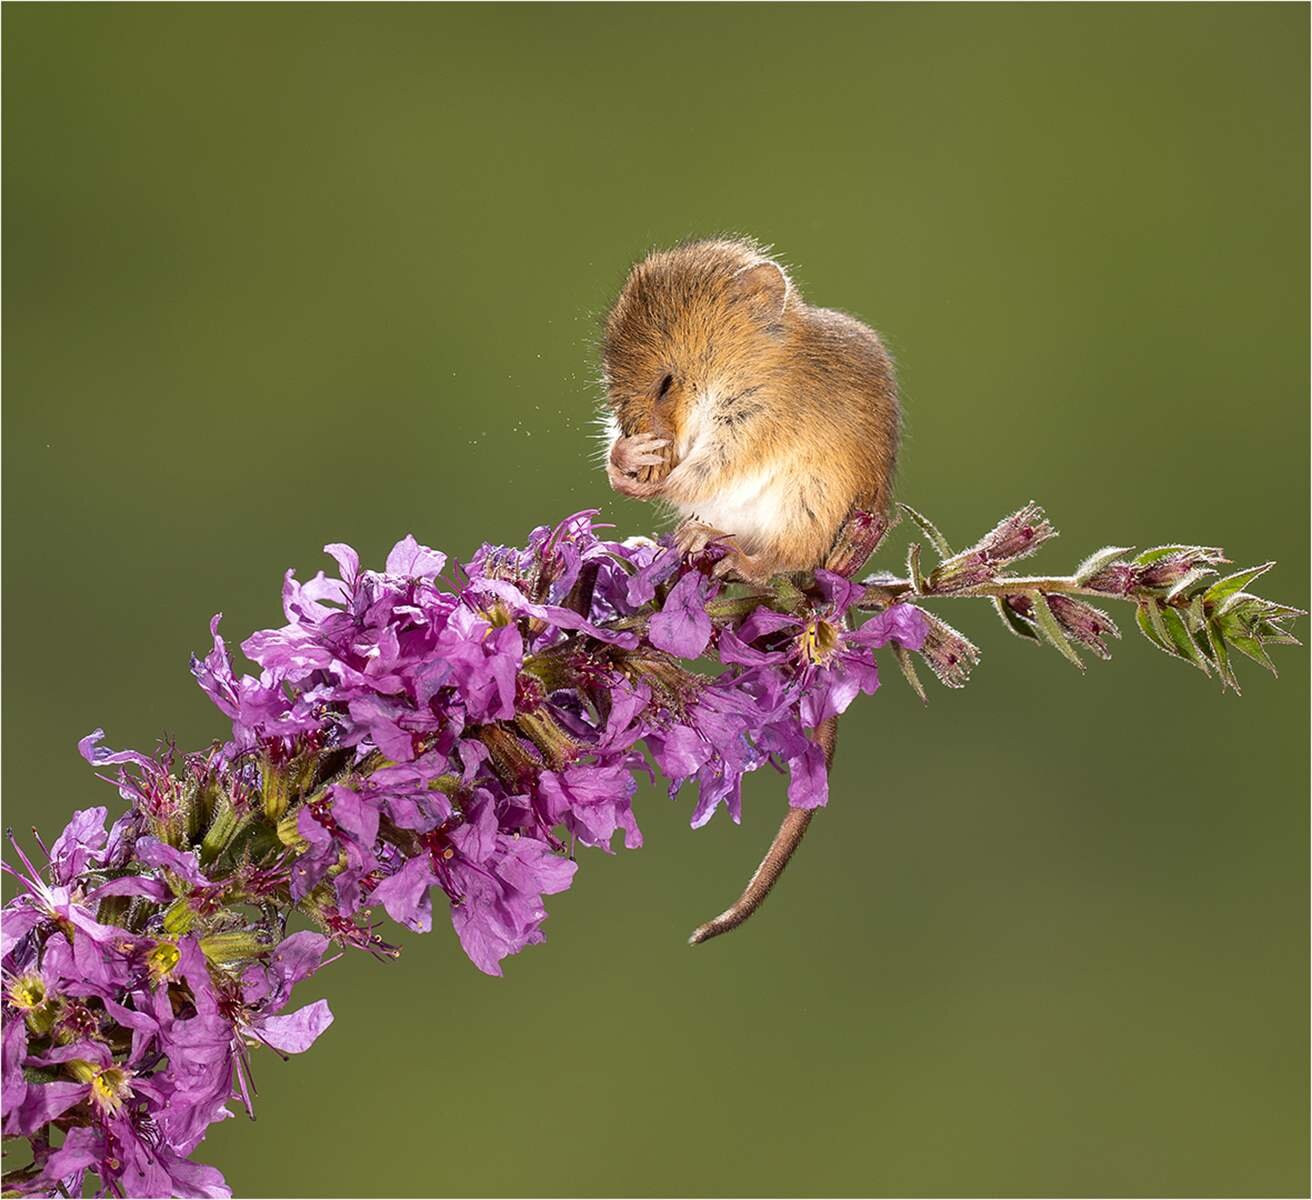 'Preening Harvest Mouse'